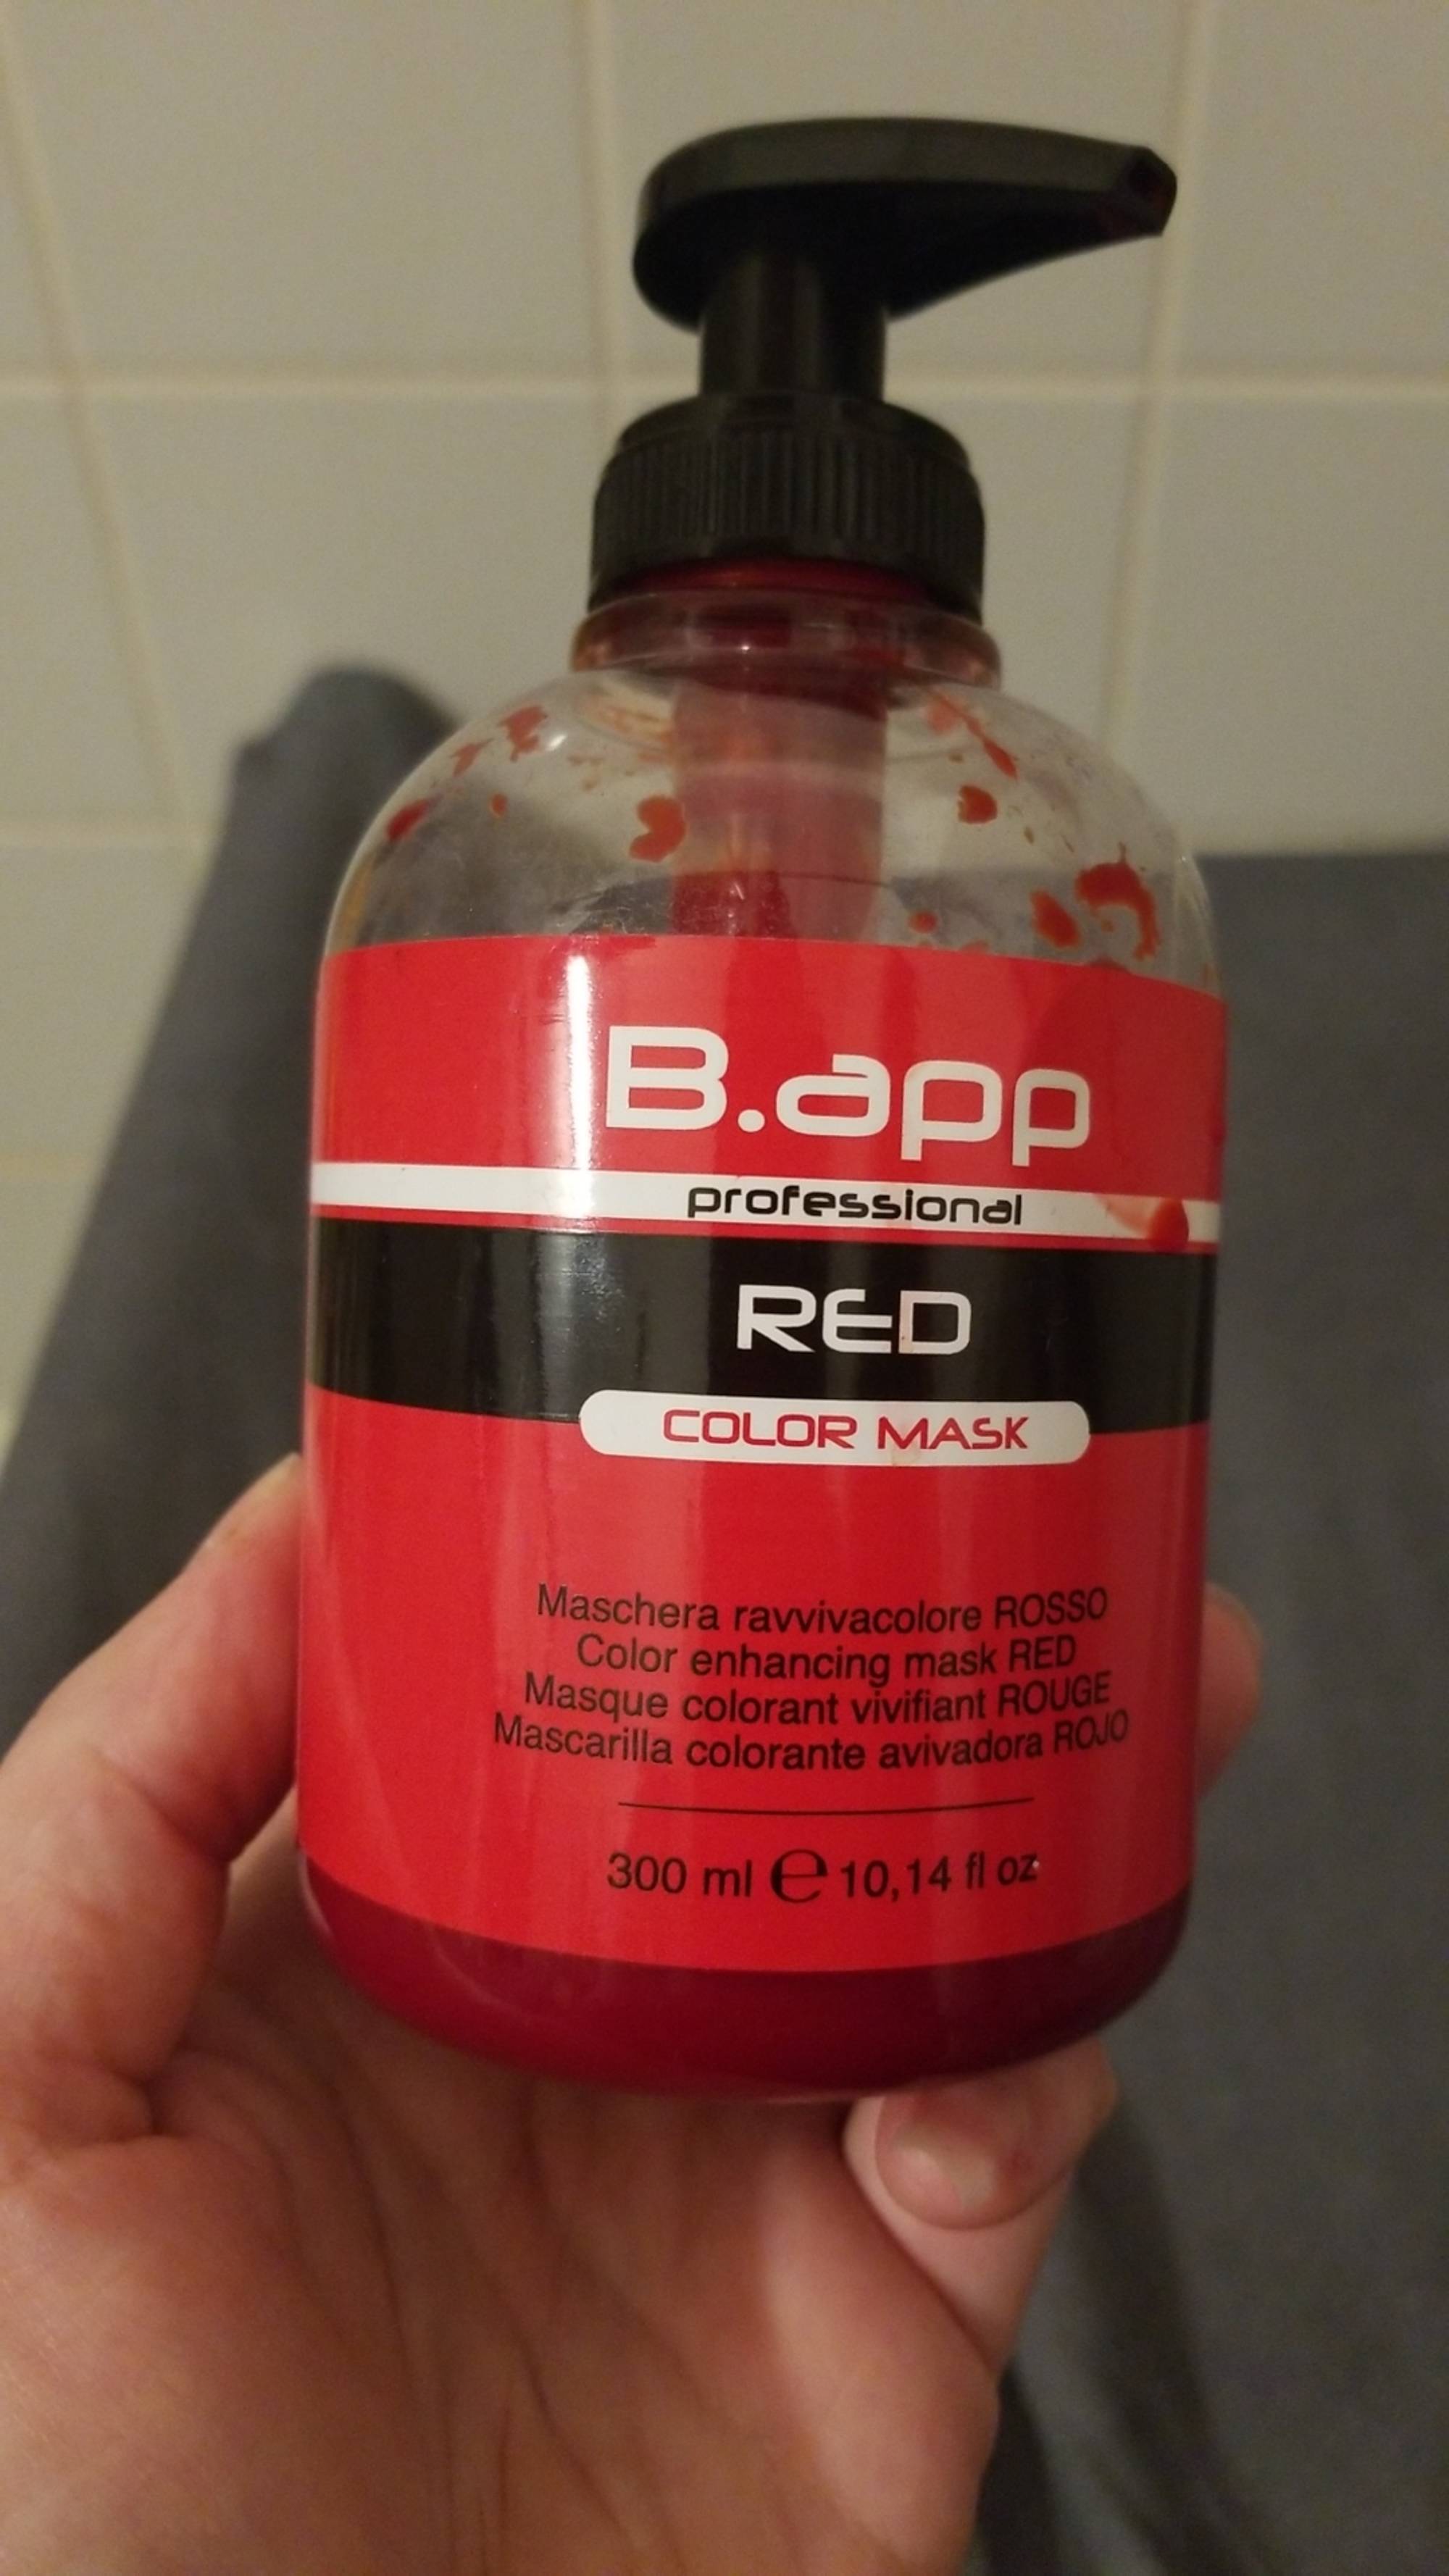 B.APP - Red color mask - Masque colorant vivifiant rouge